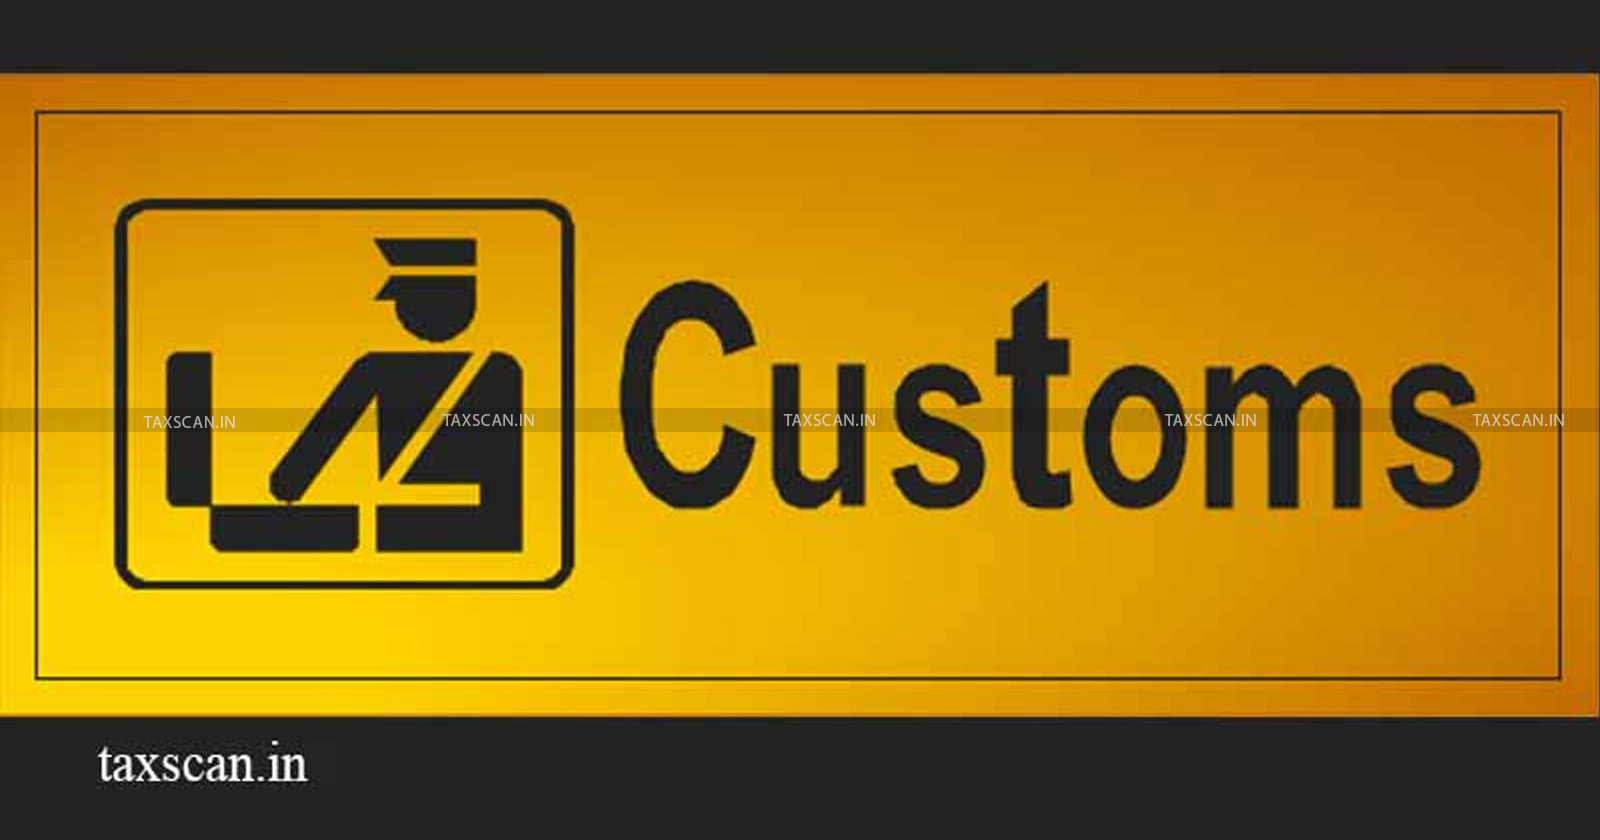 CESTAT - CESTAT Chennai - Customs duty - Customs Notification Amendment - taxscan